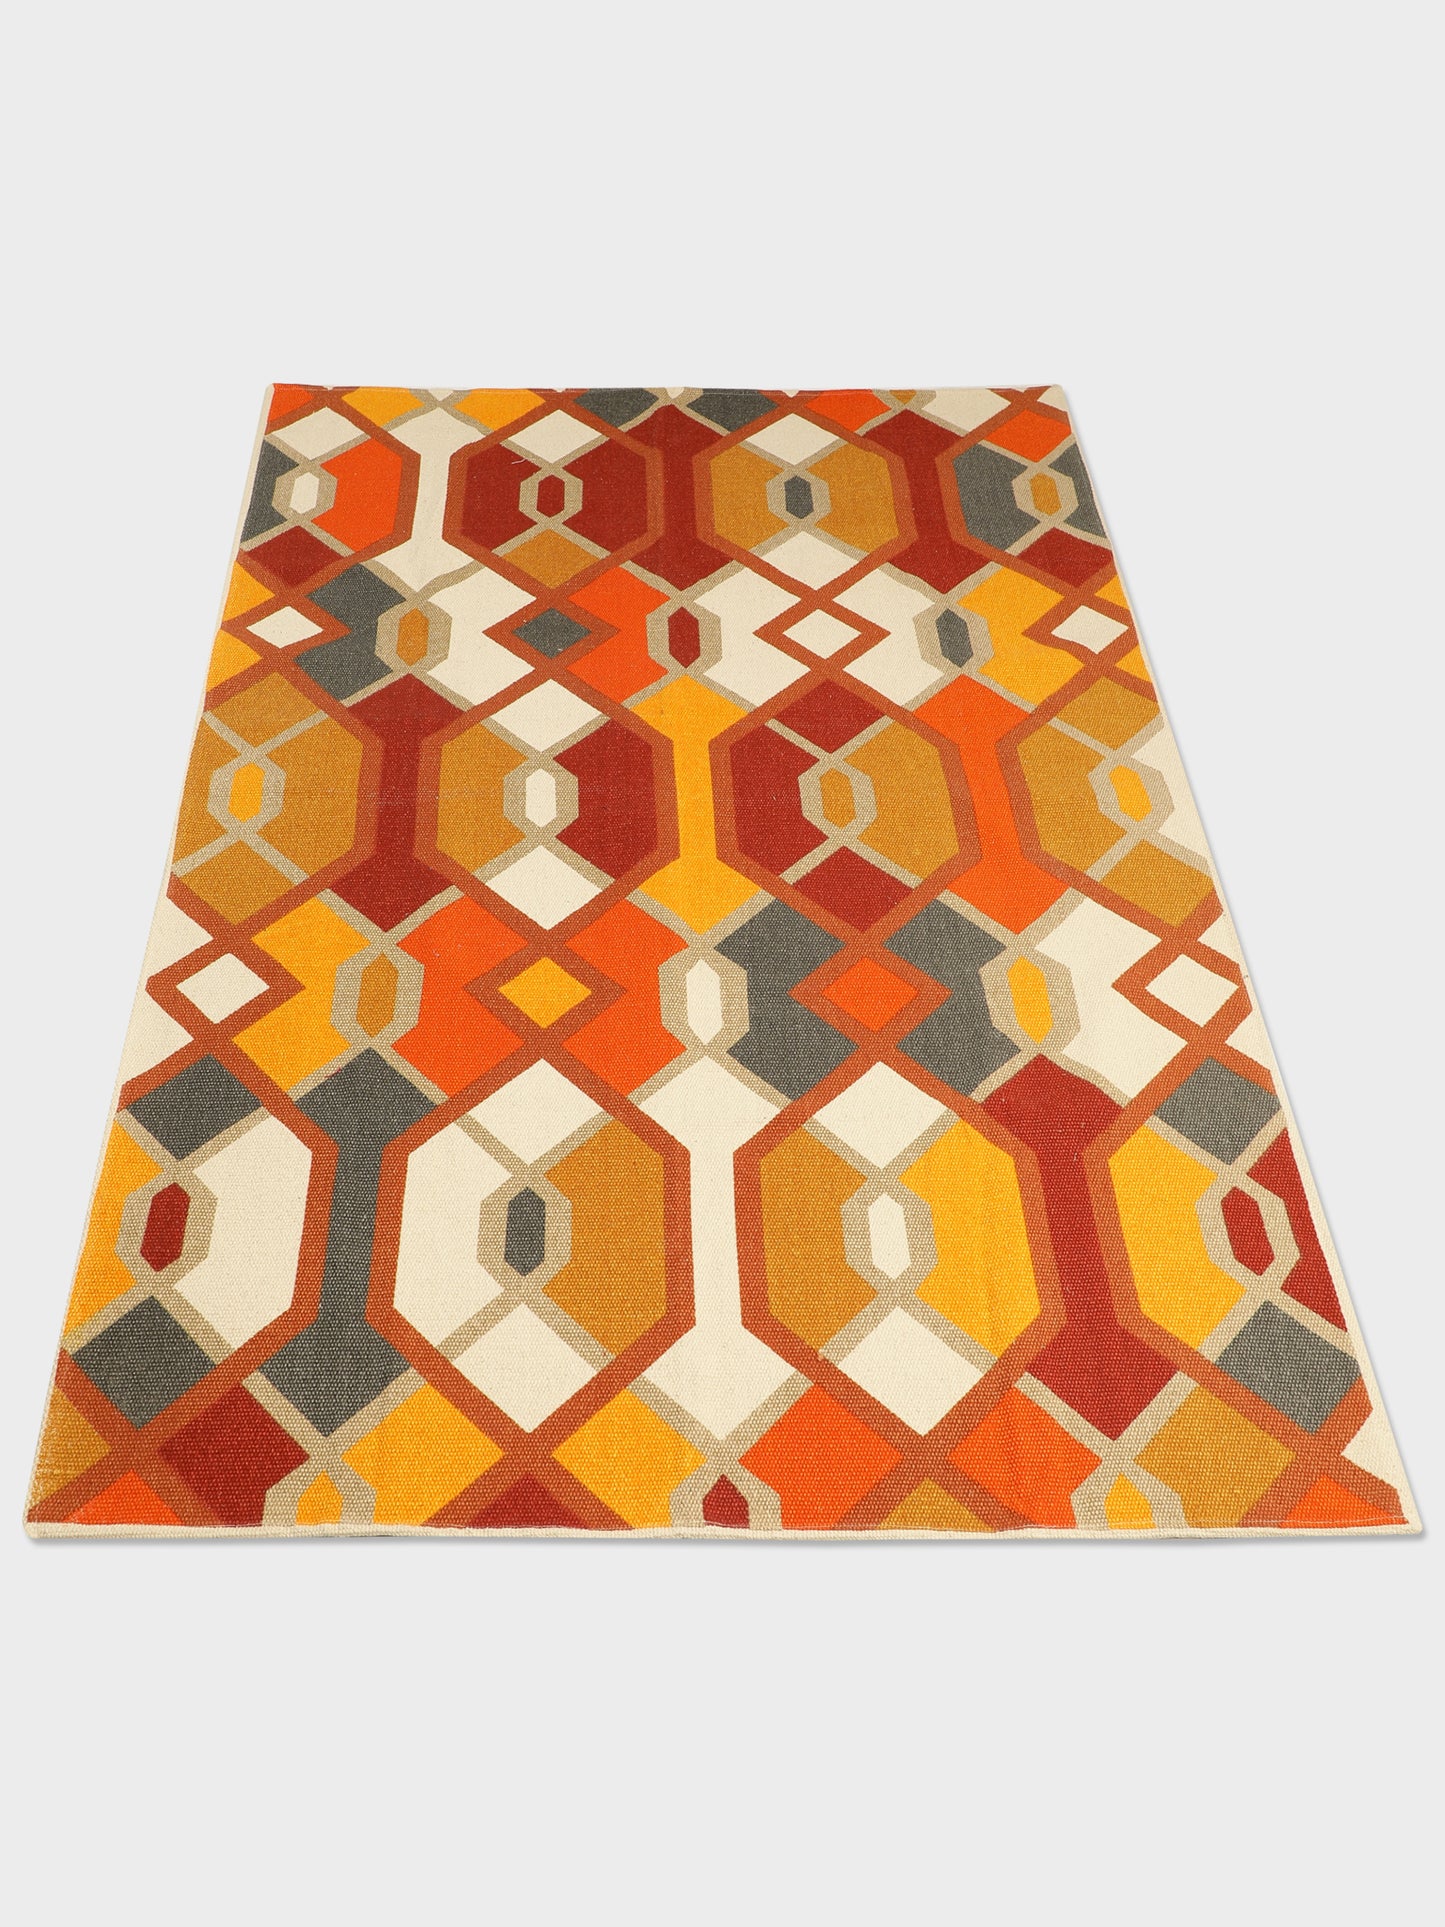 Jharokha "4x5.5" Printed Cotton Carpet